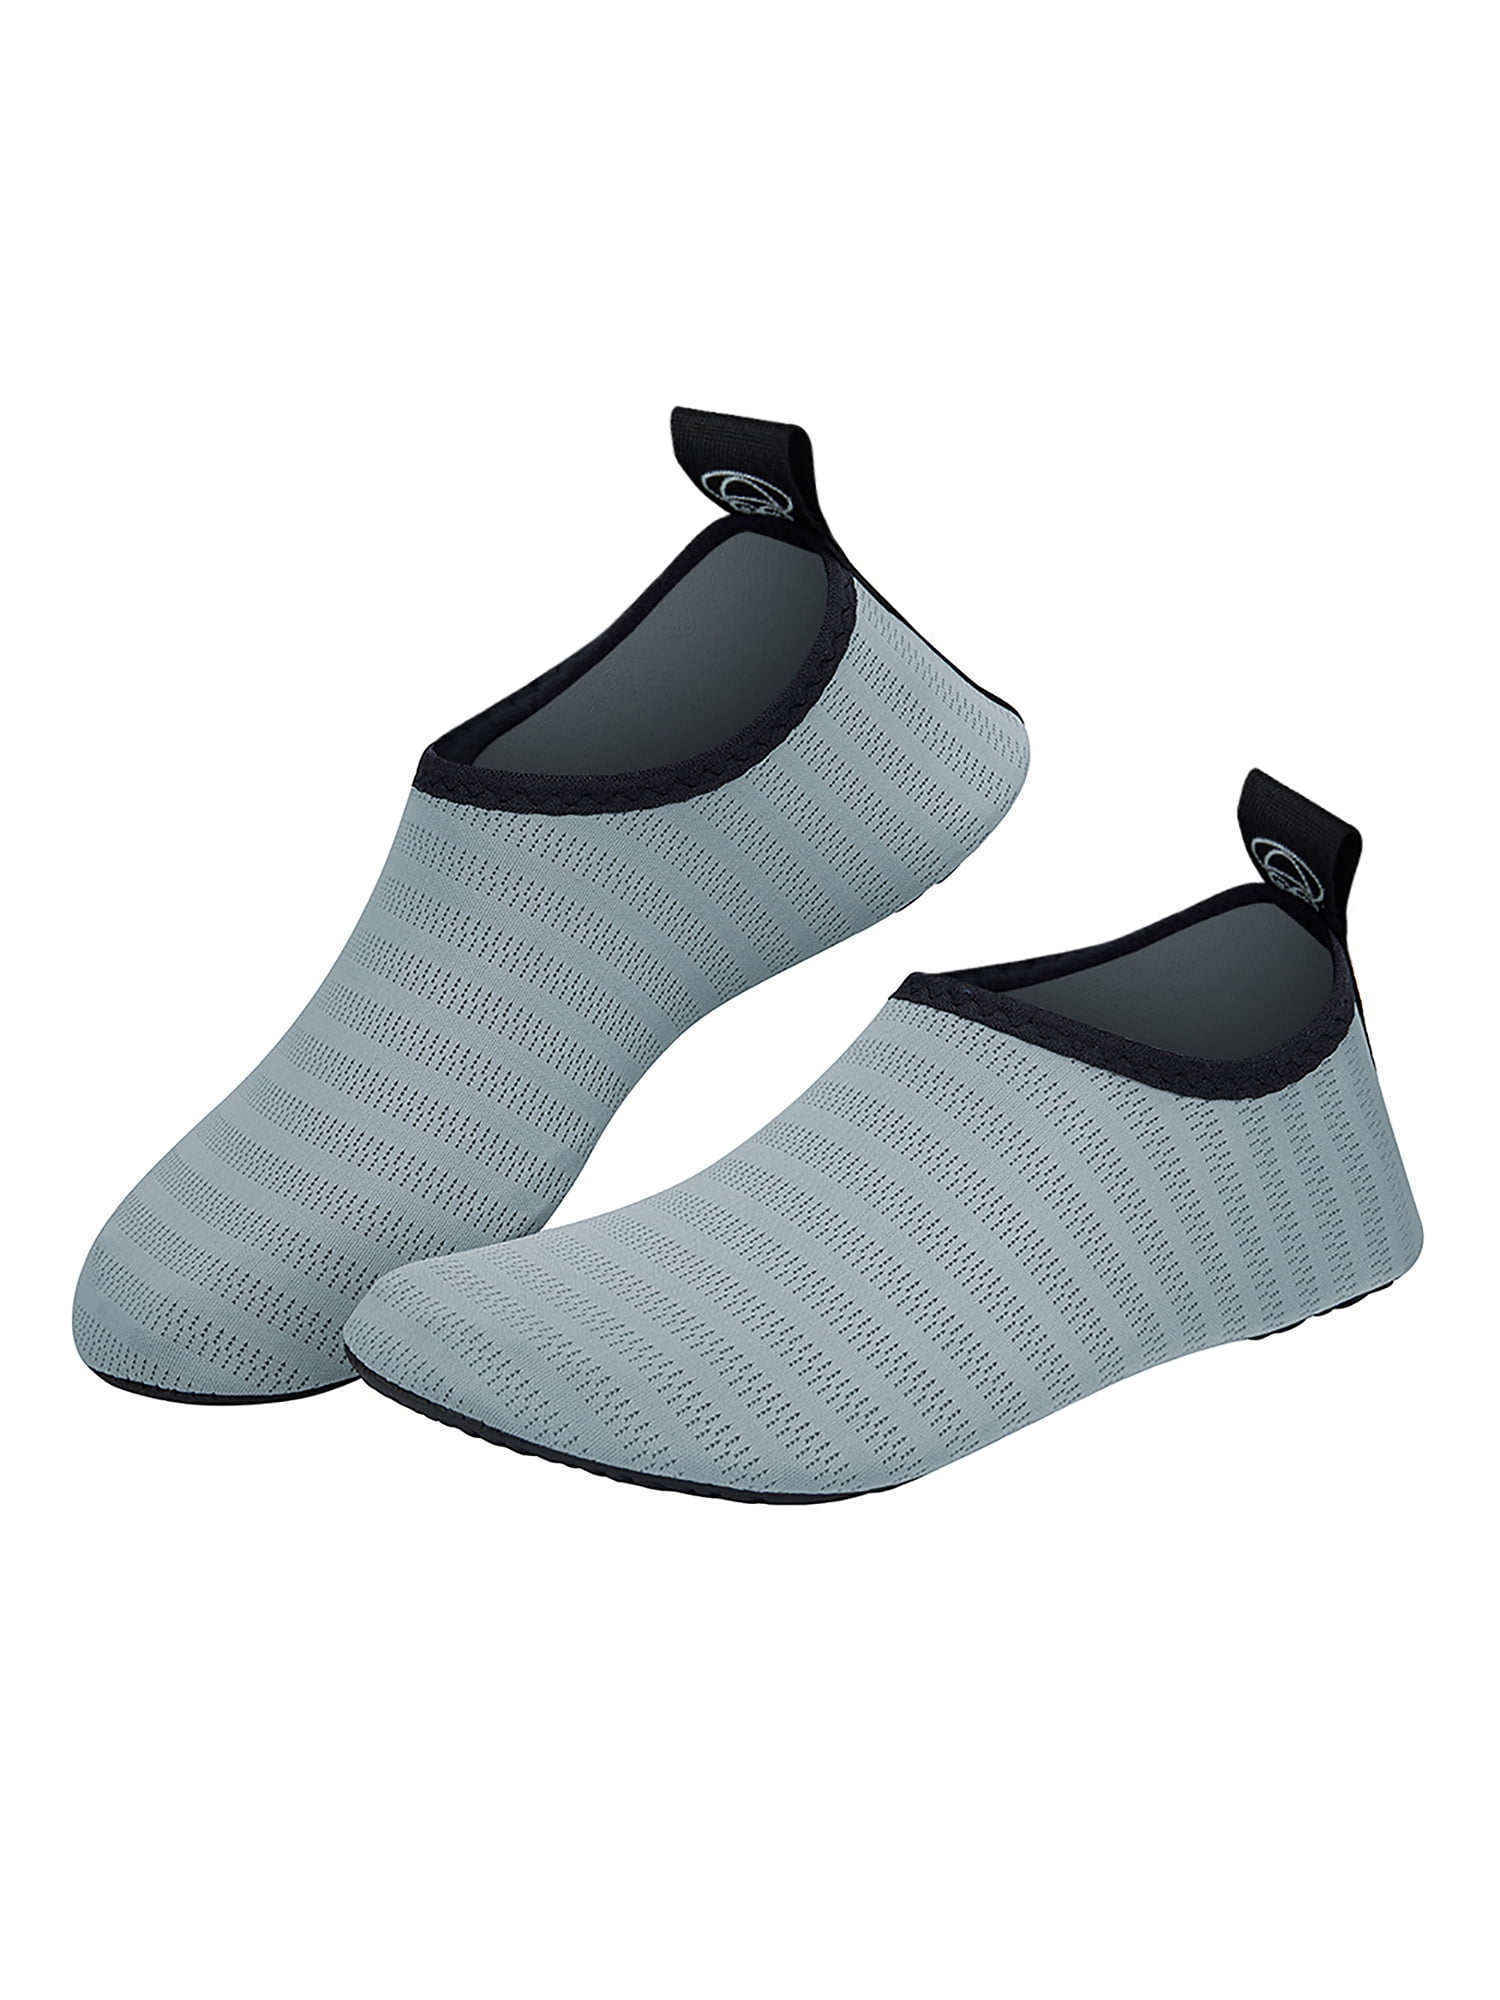 Norbi Barefoot Water Skin Shoes Aqua Socks for Beach Pool Sand Swim Surf Yoga